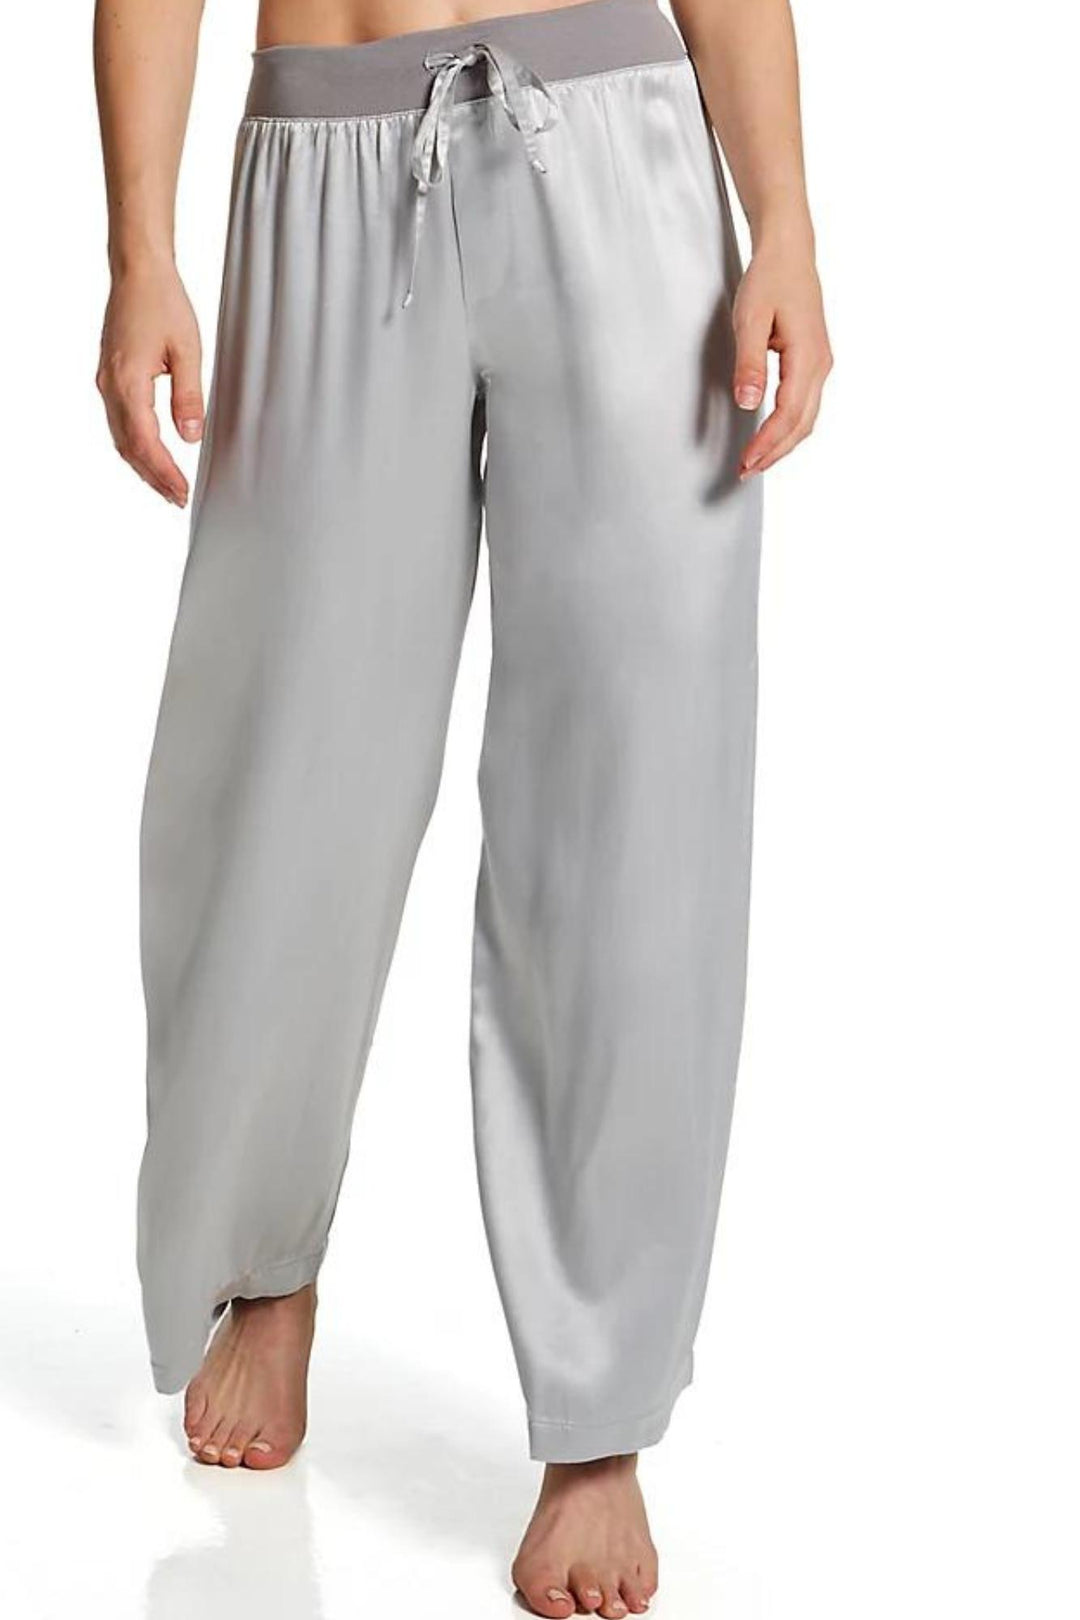 PJ Harlow Dreamwear Jolie Satin Pant in Dark Silver